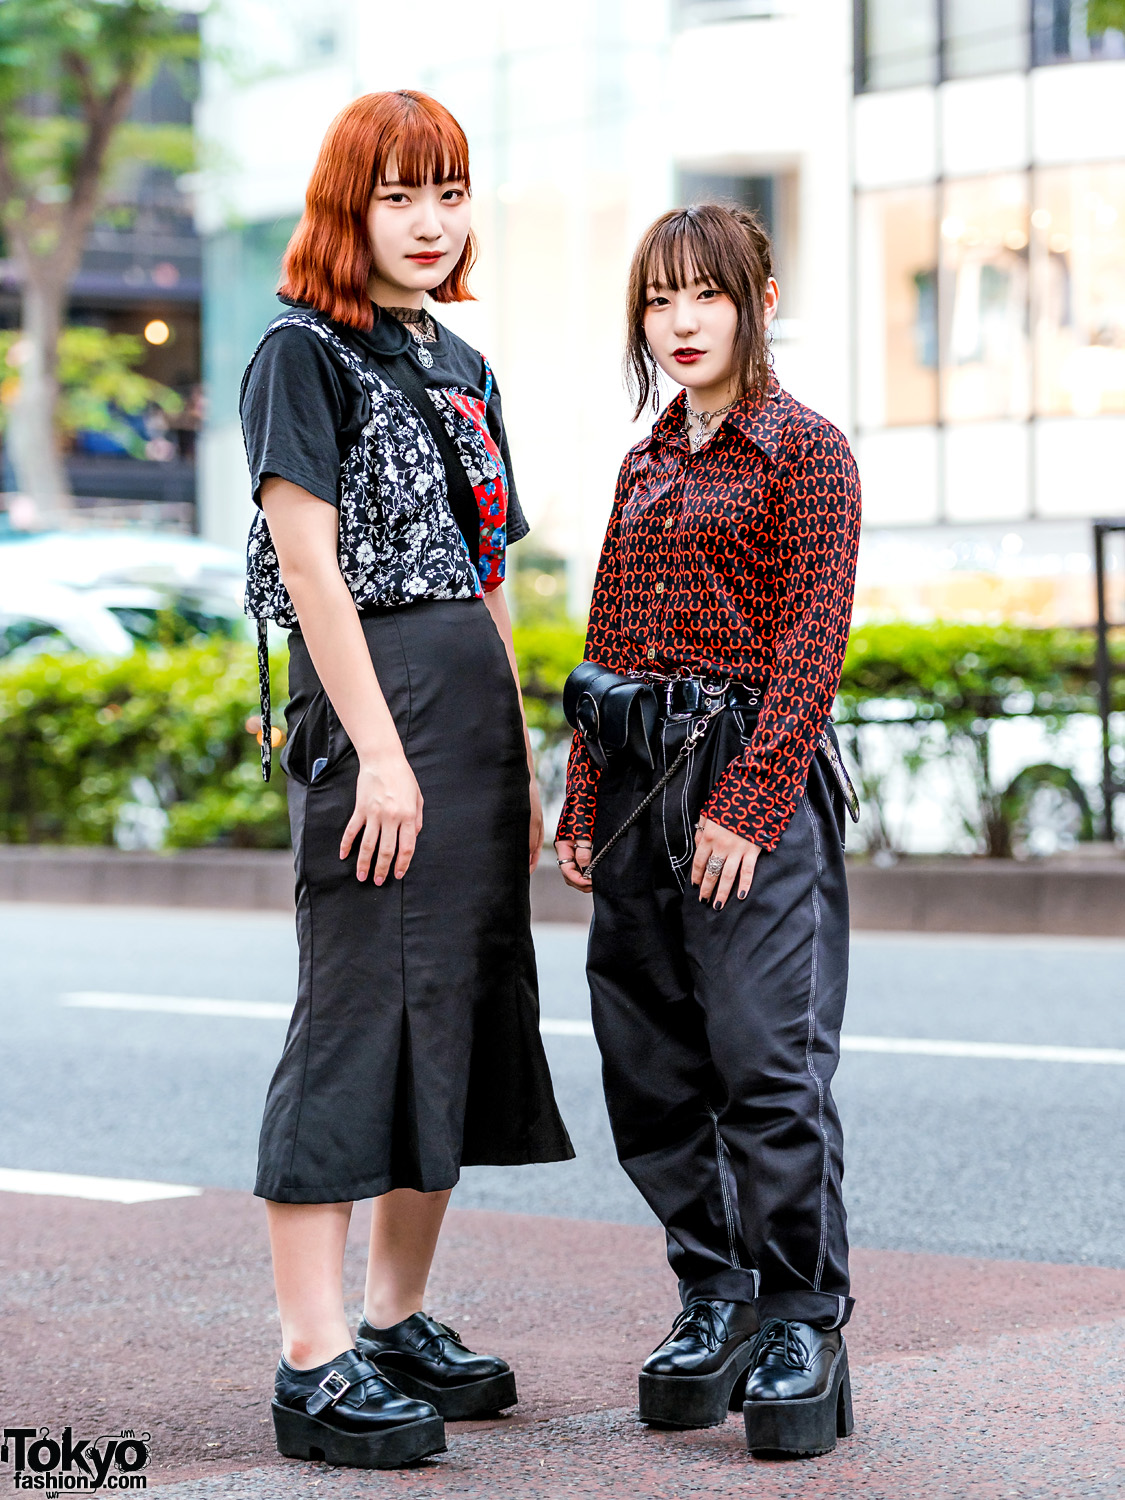 Harajuku Girls' Black Vintage Street Styles w/ More Than Dope Floral Top, Horseshoe Print Blouse, Mermaid Skirt & Faith Tokyo Accessories